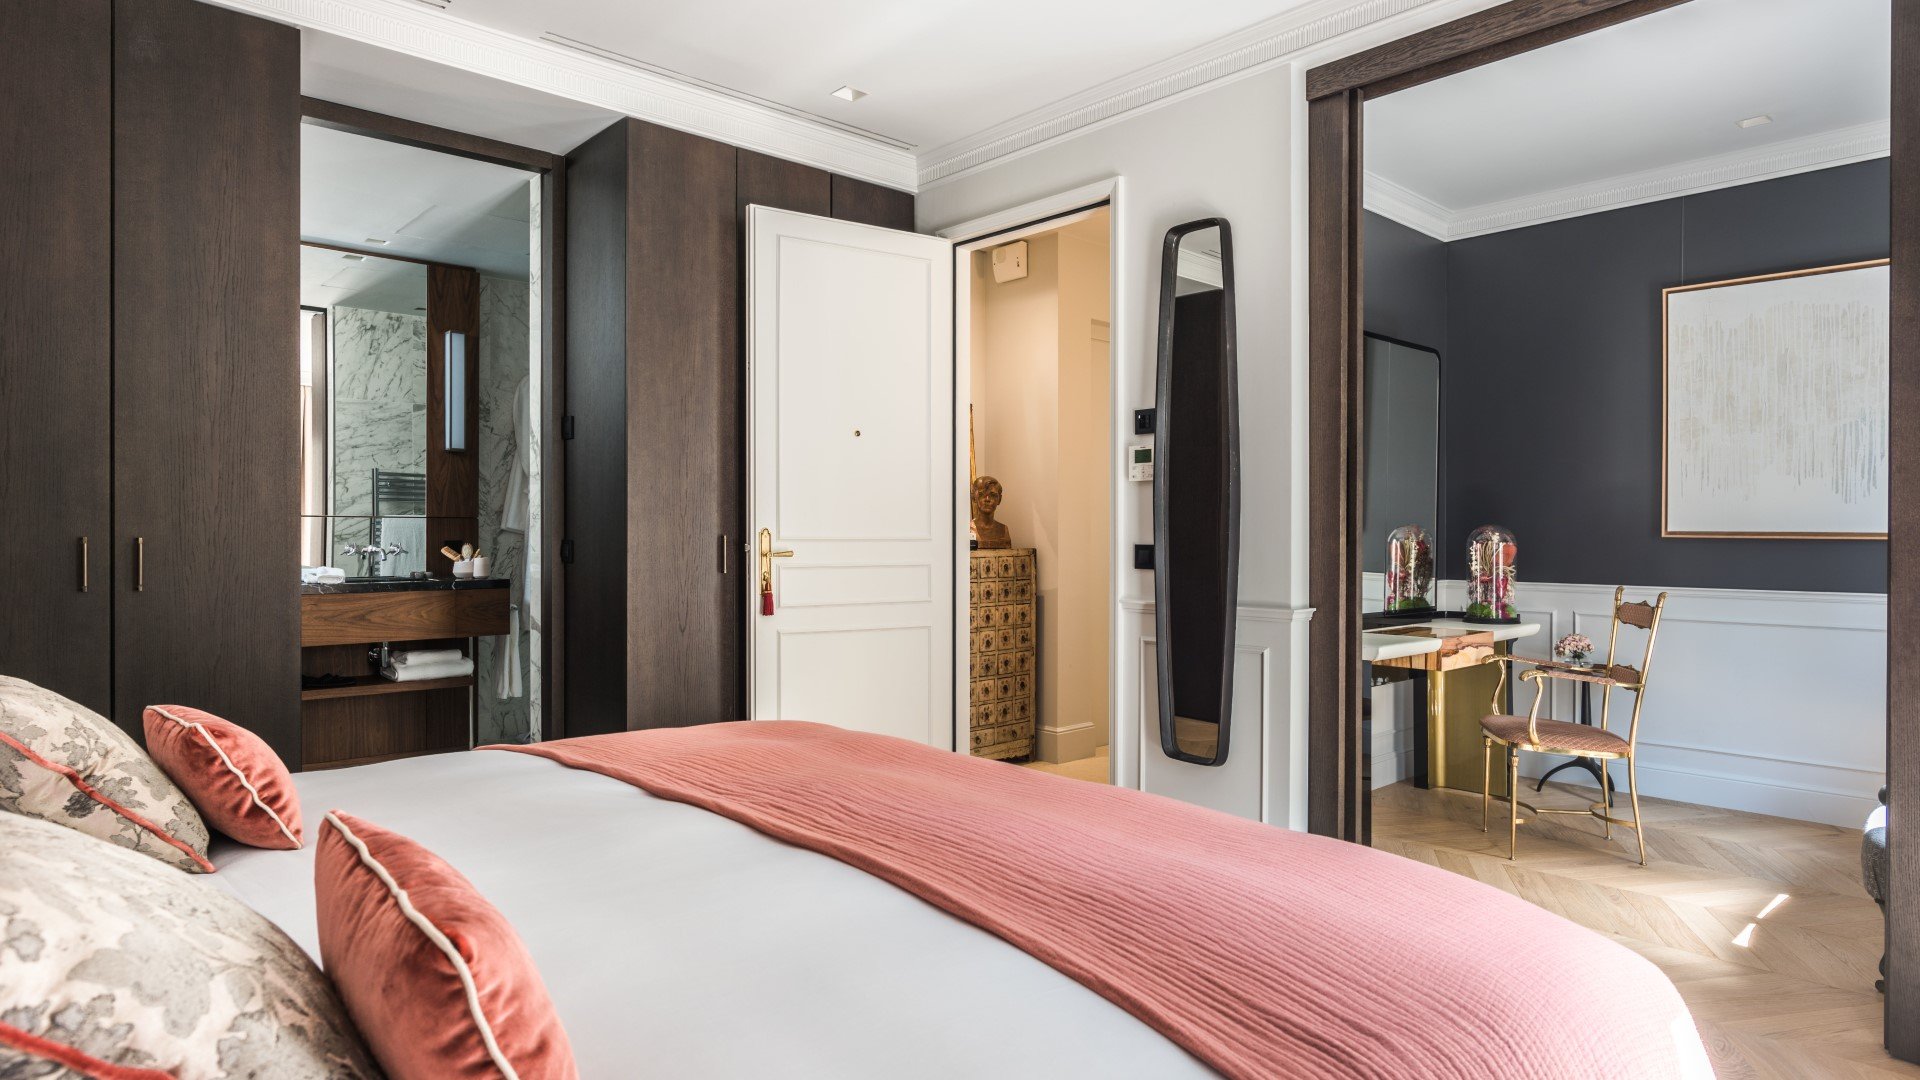 Homanie Paris Mandel bedroom luxury master with bathroom and office, luxury home Paris